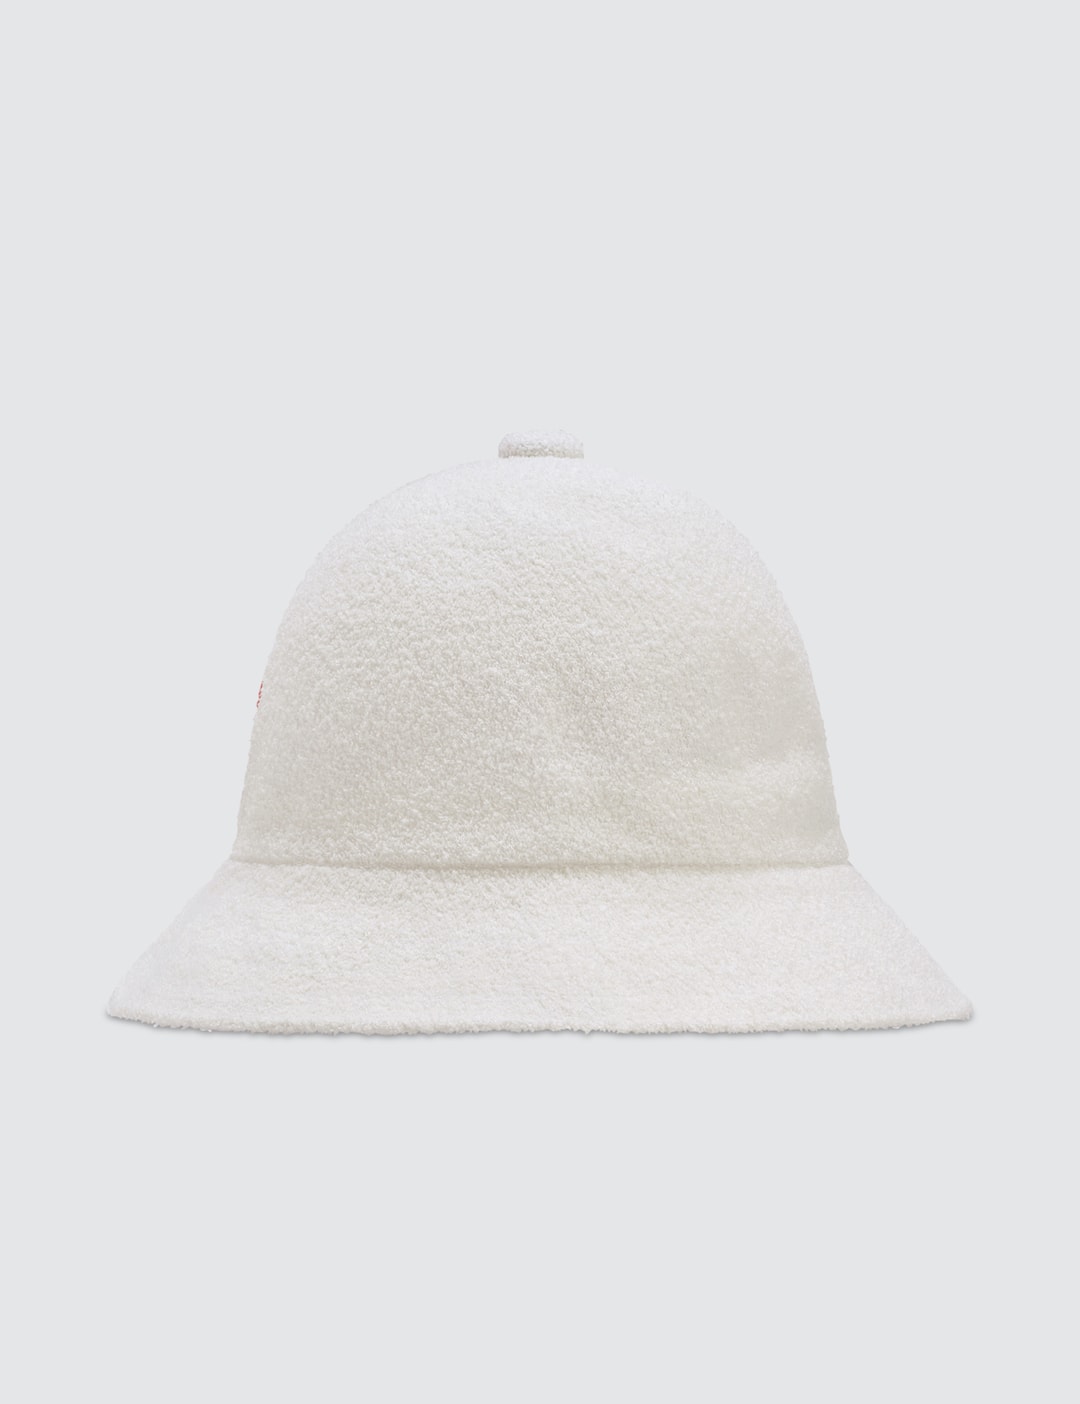 Kangol - Bad Taste Casual Bucket Hats | HBX - Globally Curated Fashion ...